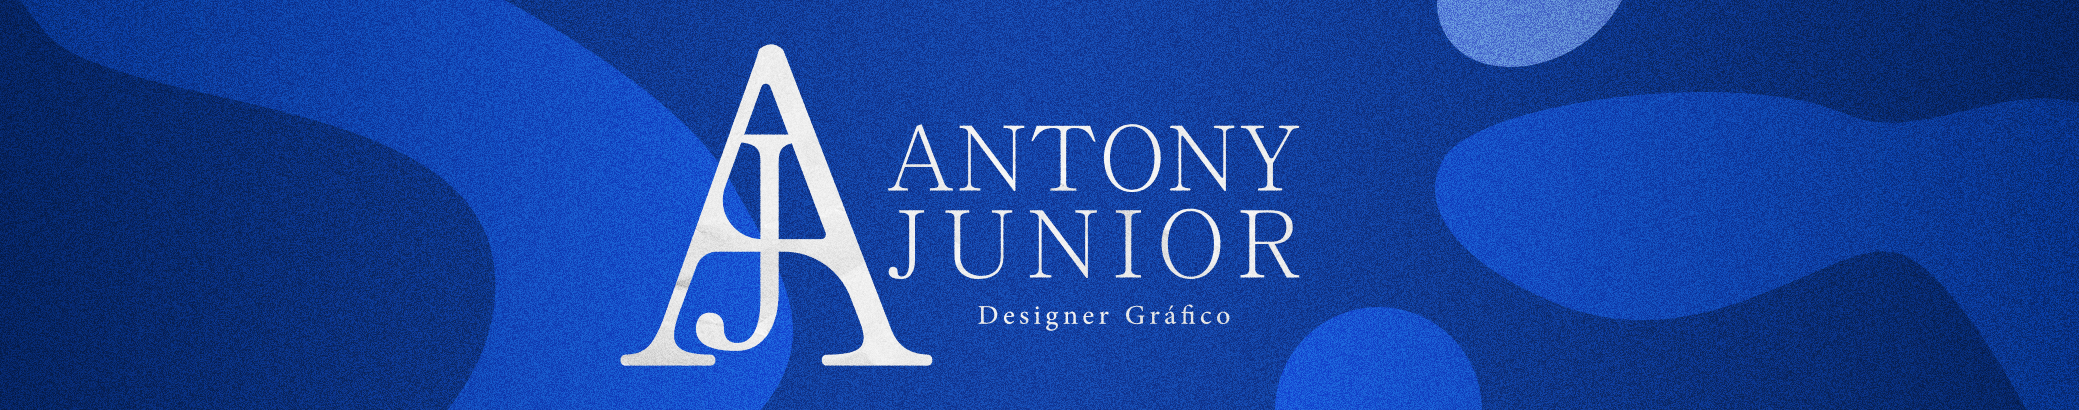 Antony Junior's profile banner